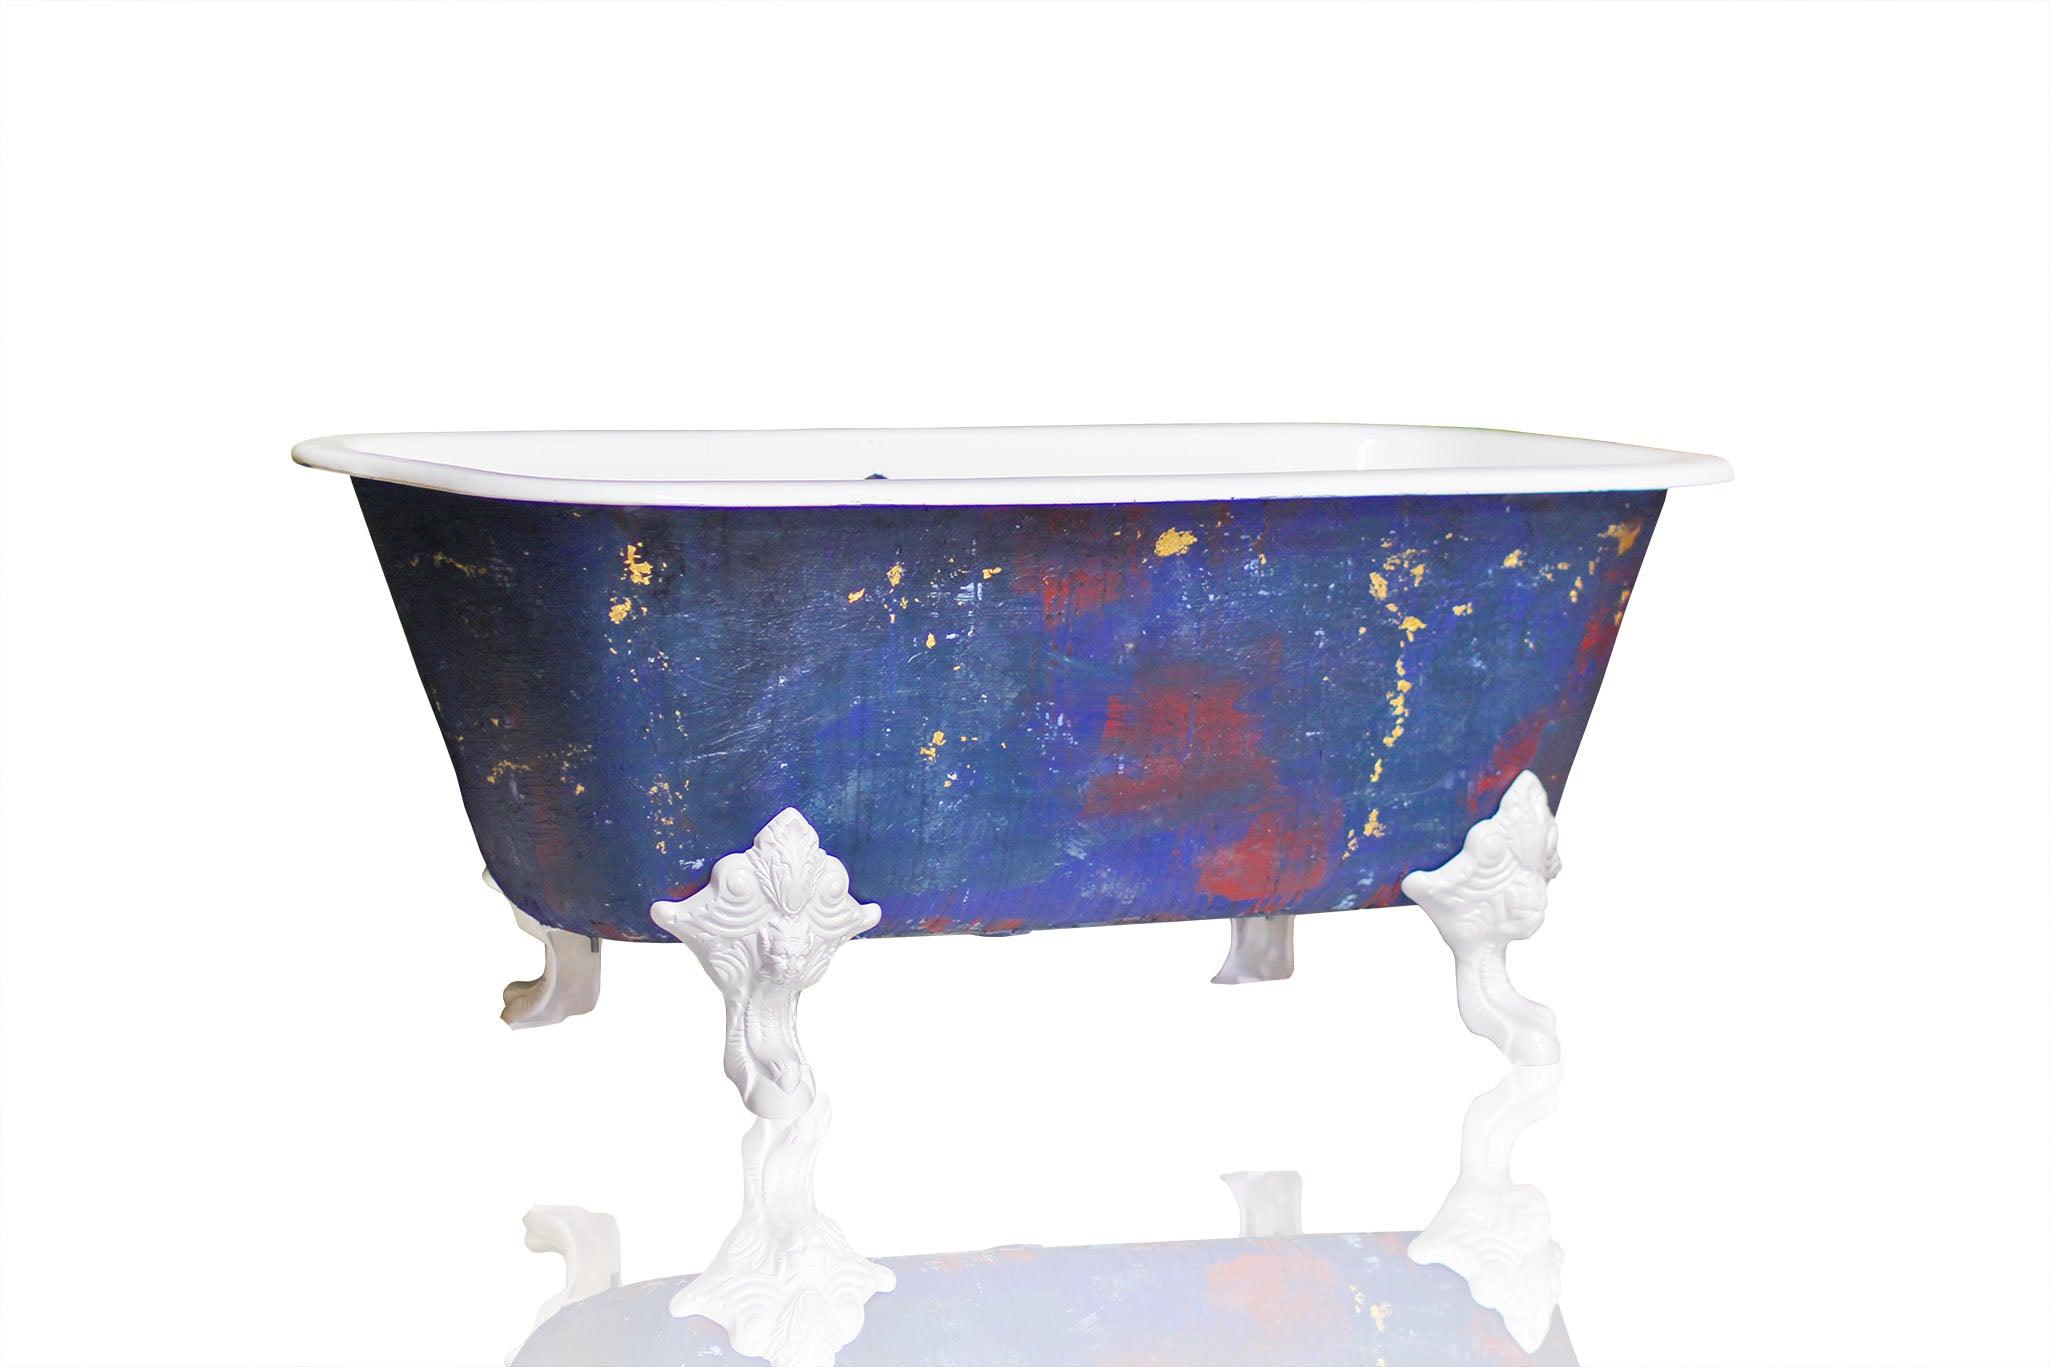 WatermarkFixtures Square Cast Iron Clawfoot Bathtub Trompe L’oeil Antiqued Lagniappe Freestanding Claw Tub - Degas Blue - Bathroom Design Center